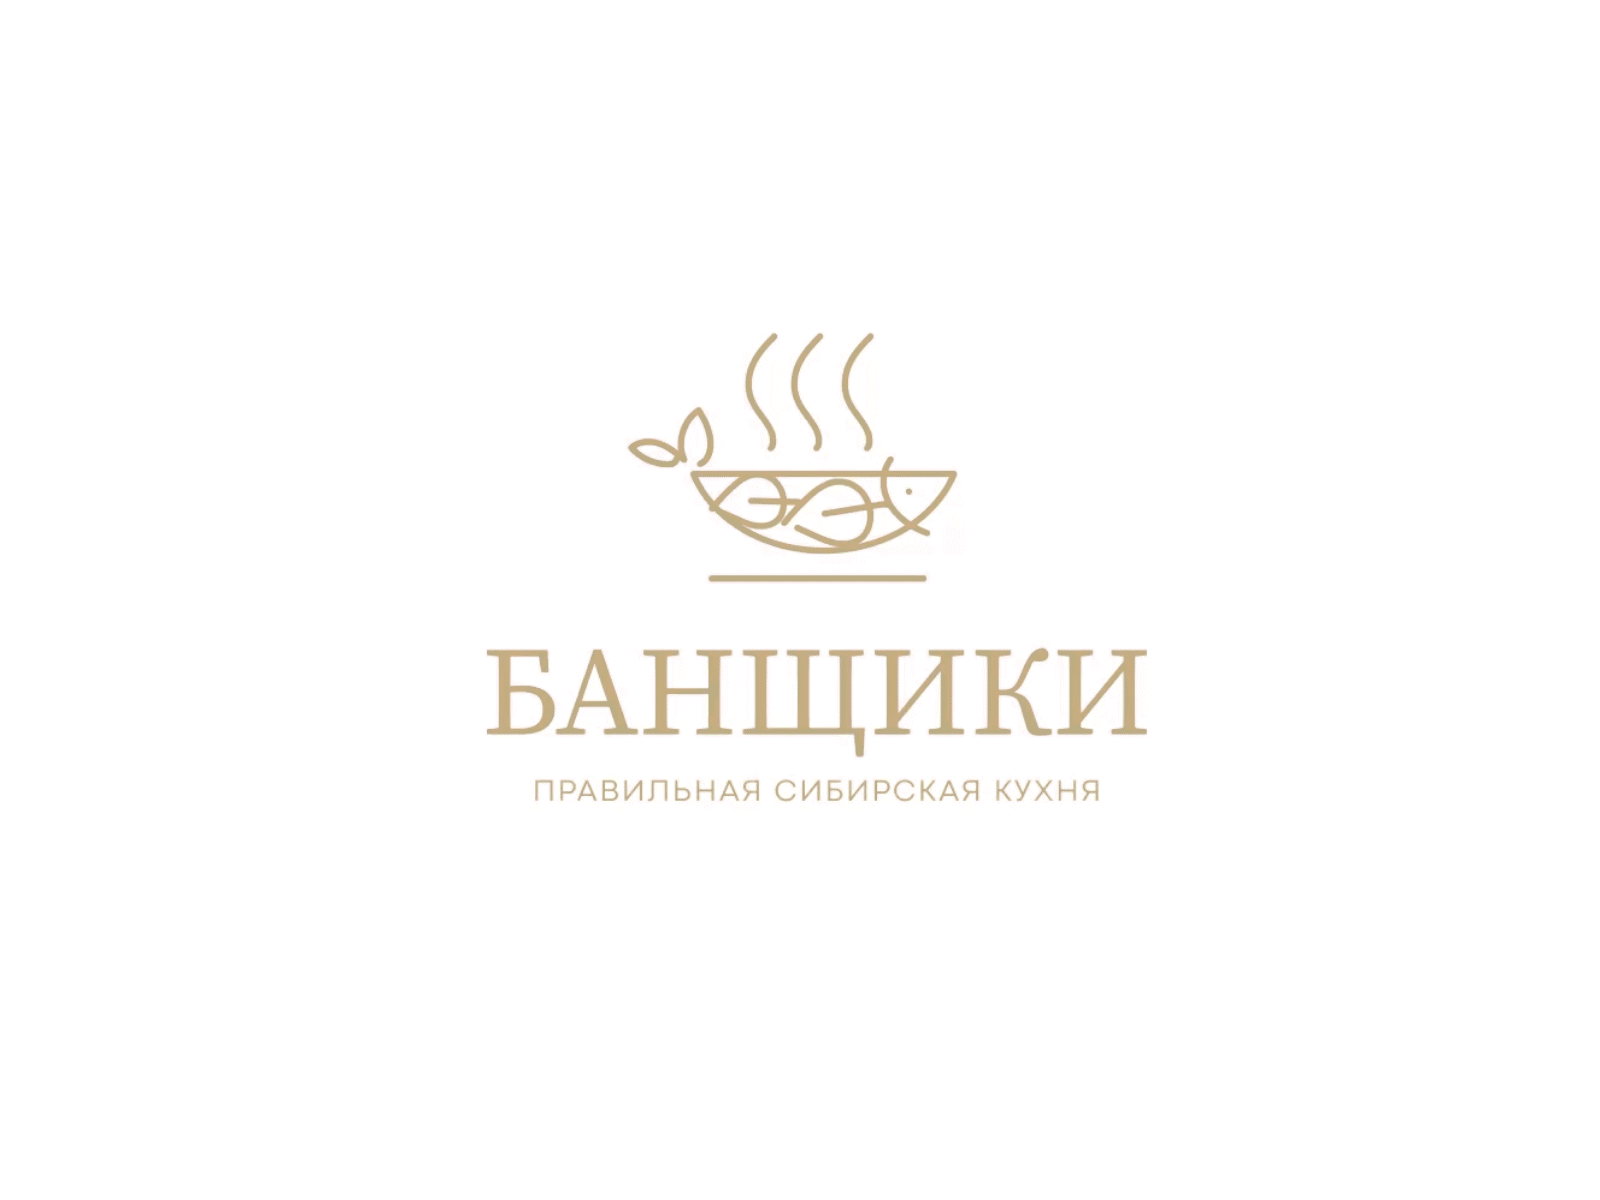 Banshchiki animation bath cuisine fish logo motion graphics restaurant